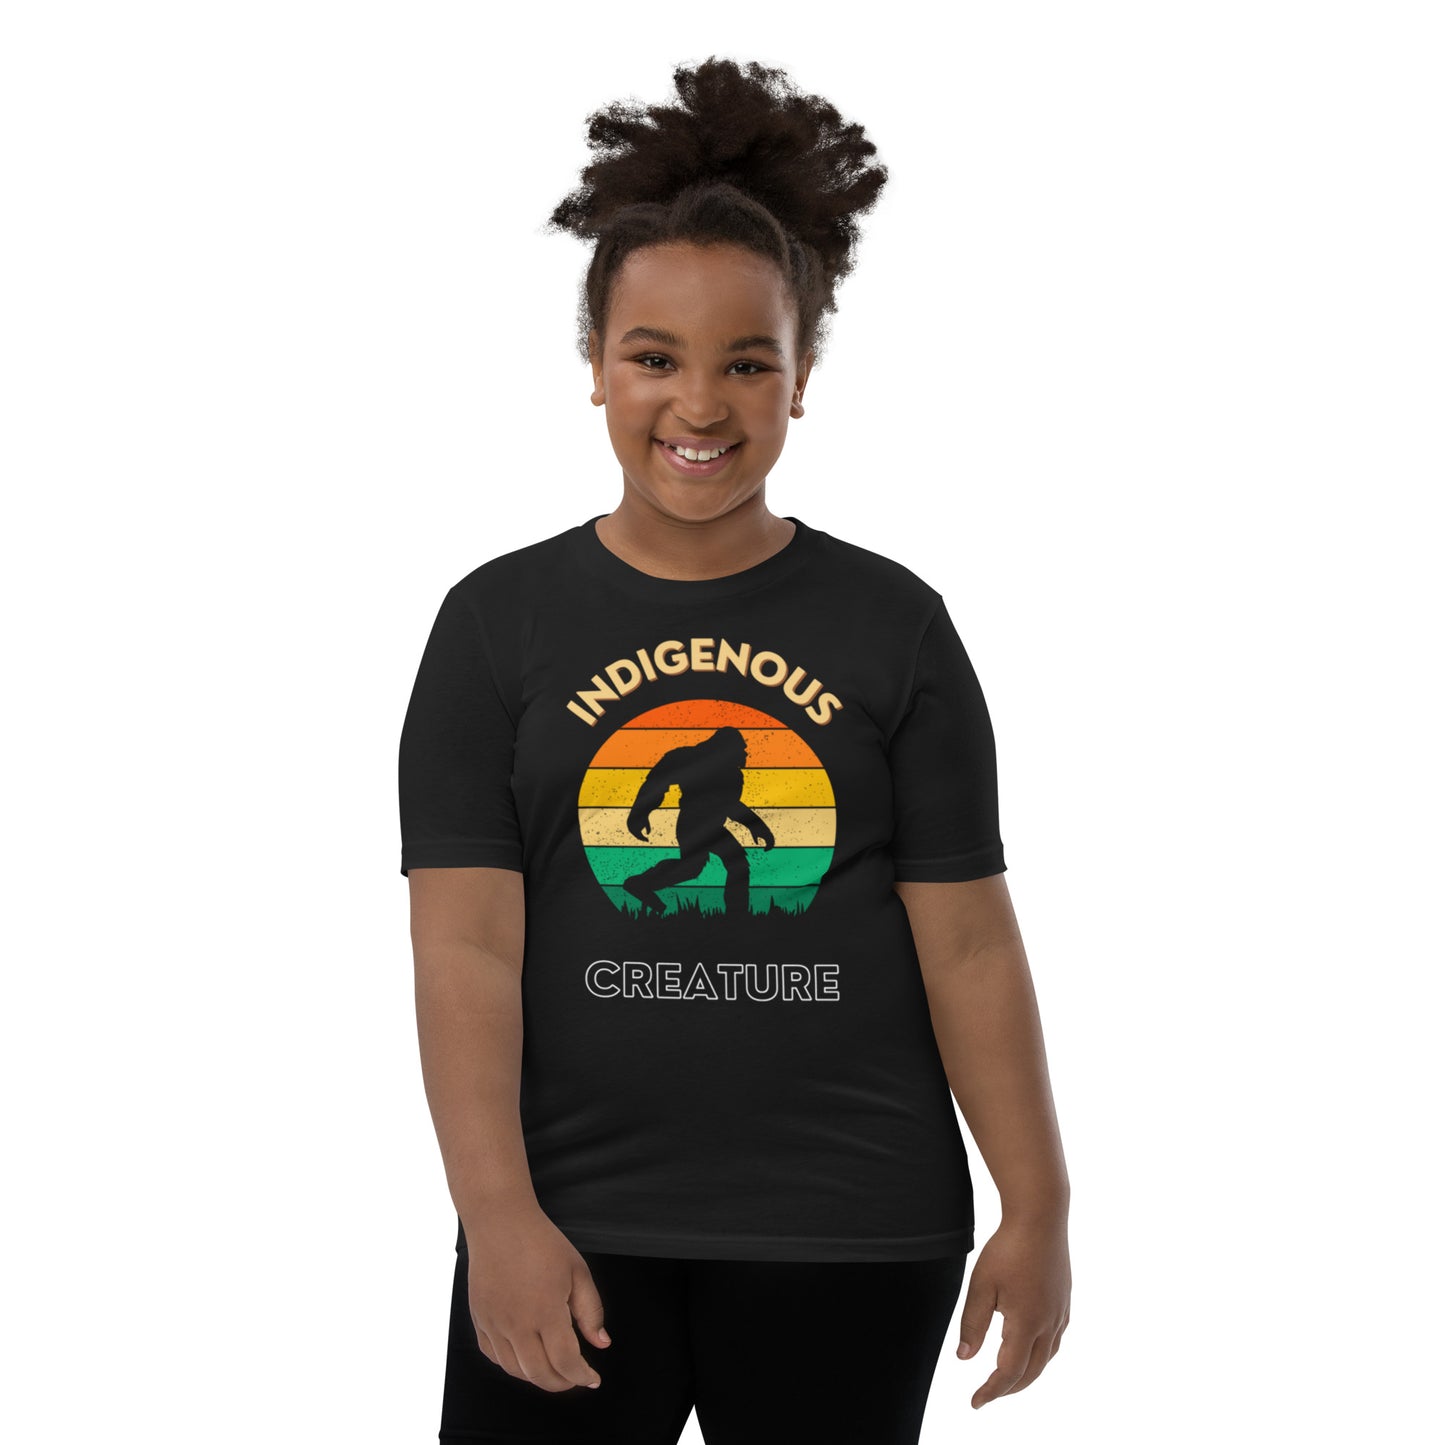 Indigenous Creature unisex Youth T-Shirt